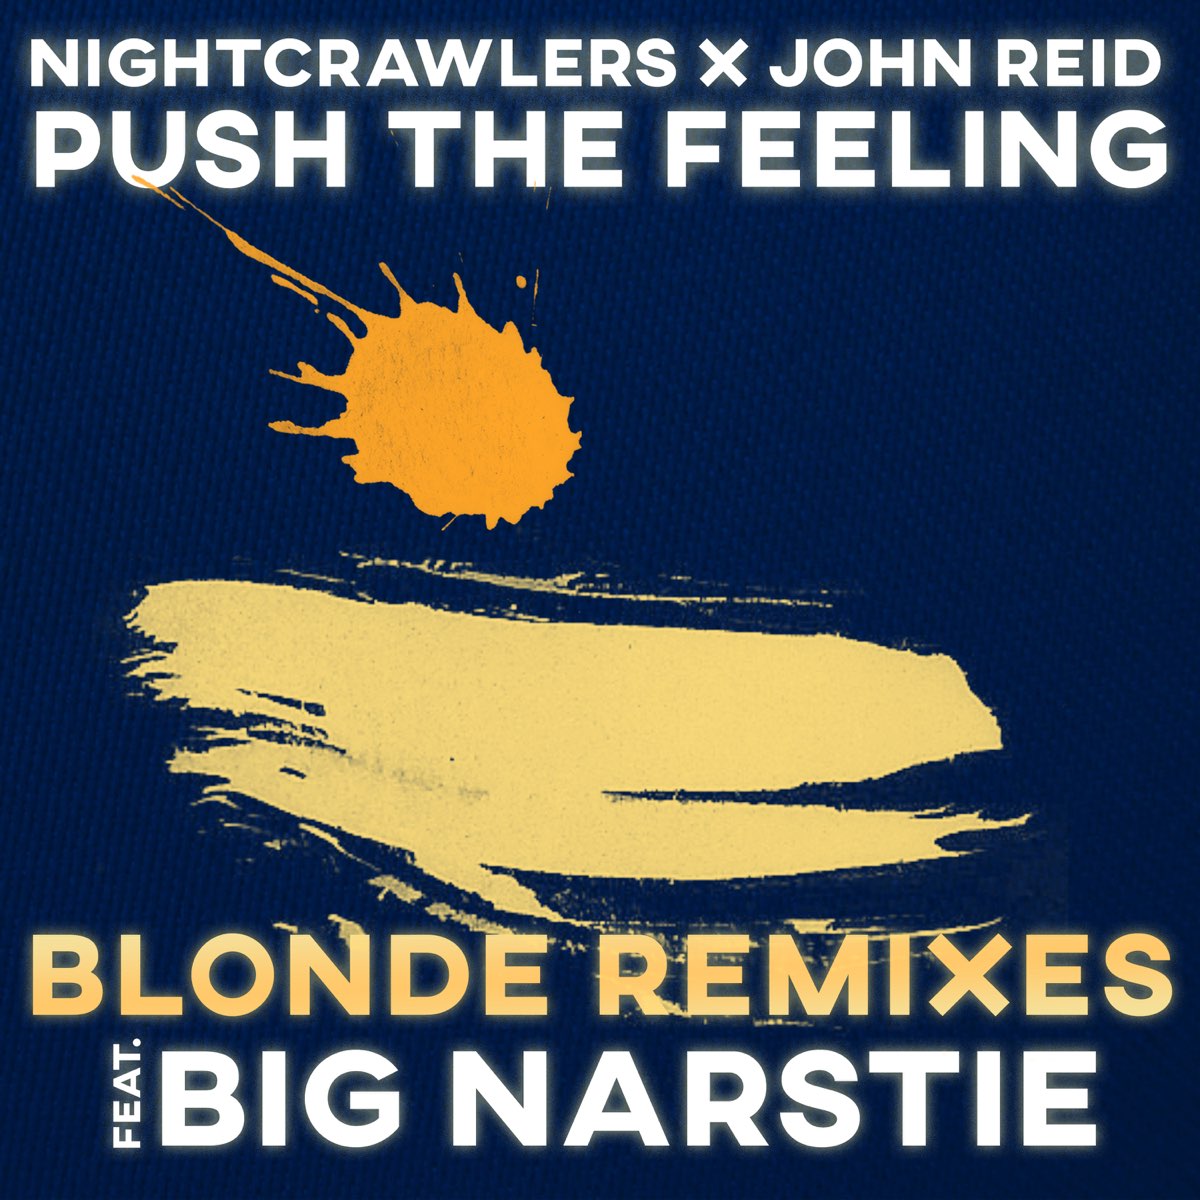 Blonde remix. John Reid Nightcrawlers. John Reid (Music Manager). Nightcrawlers Push the feeling on Perfectov Remix. Greeat Jones Nightcrawlers Push the feeling on mp3.